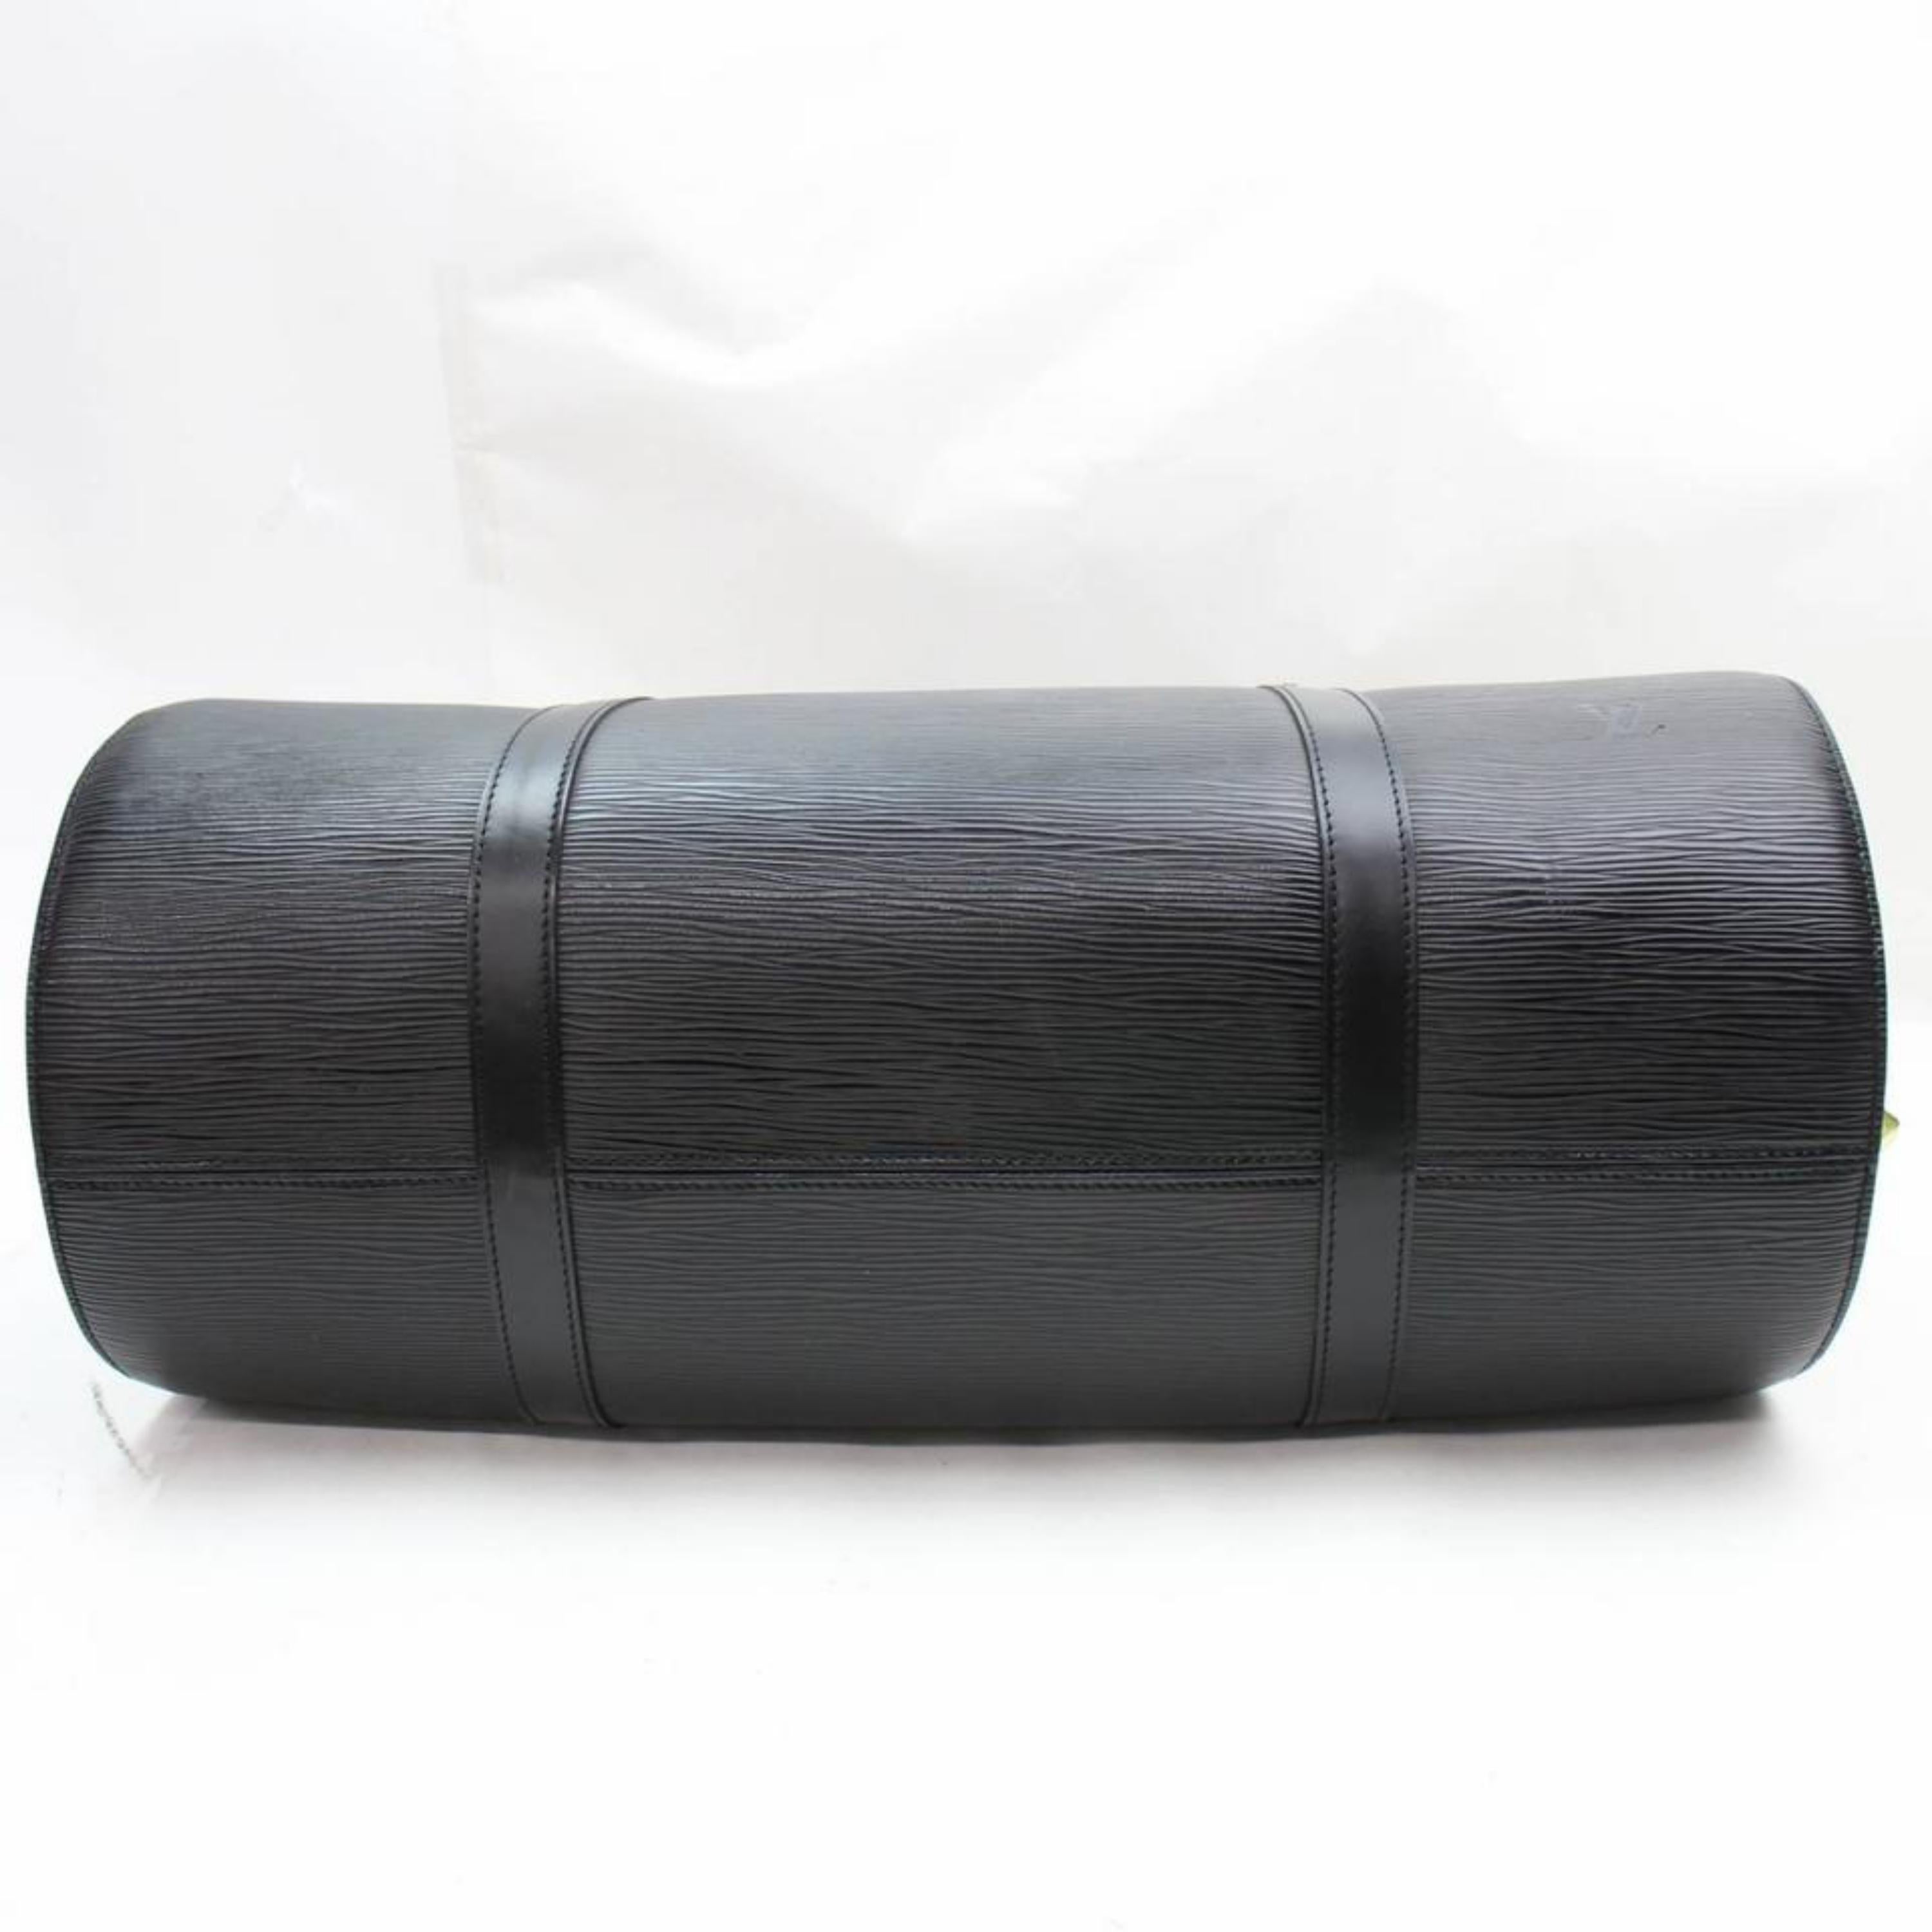 Louis Vuitton Epi Noir Solferino Gm 867425 Black Leather Weekend/Travel Bag For Sale 5